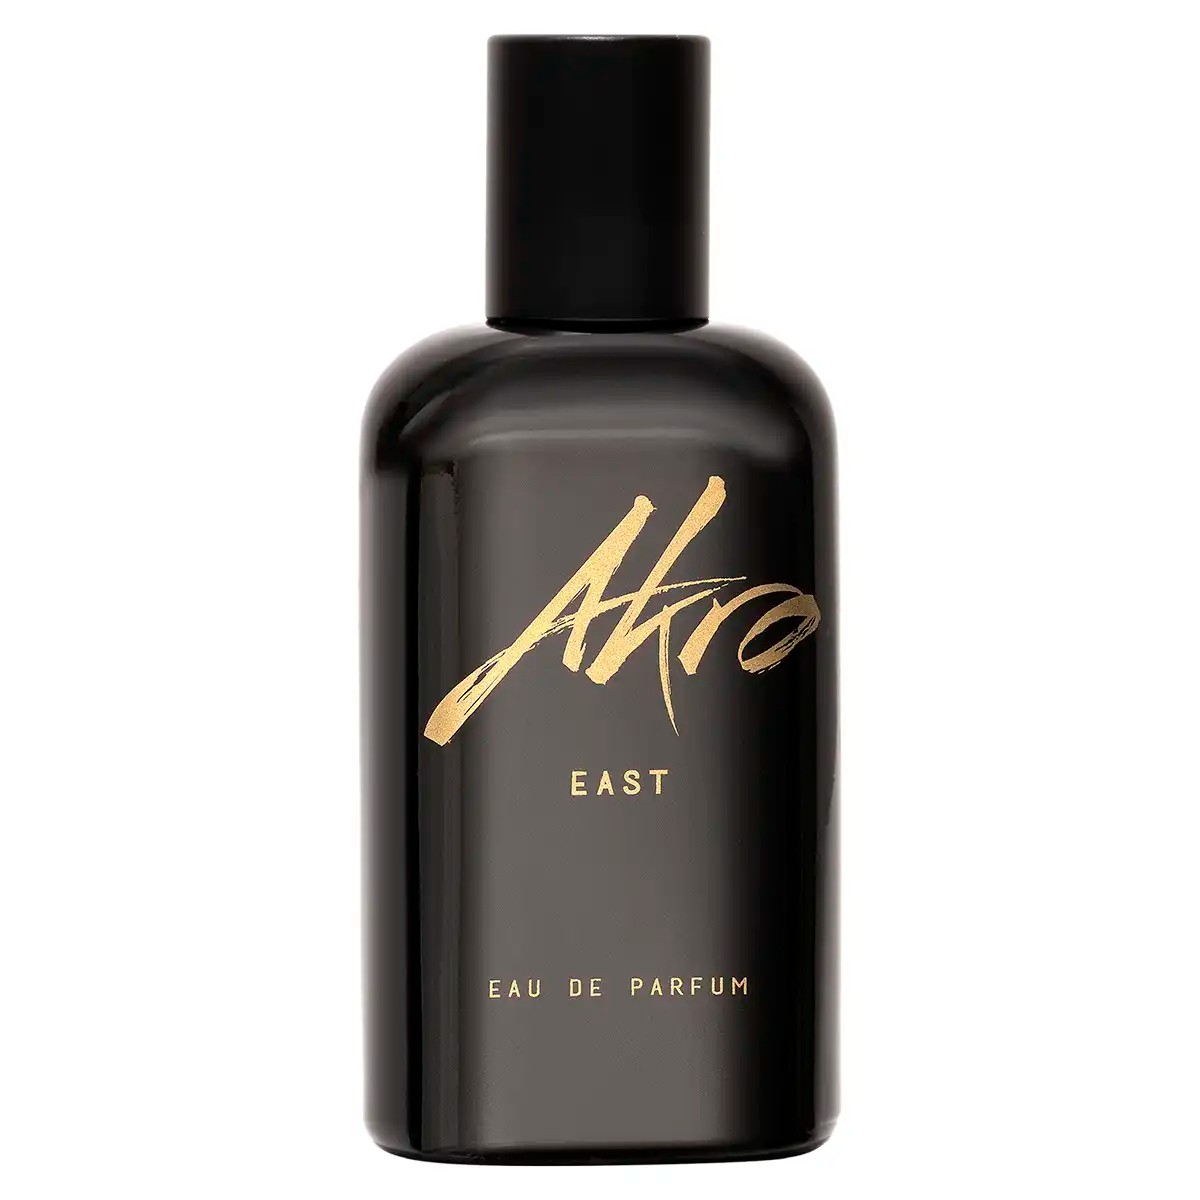 Akro East Eau de Parfum 30ml